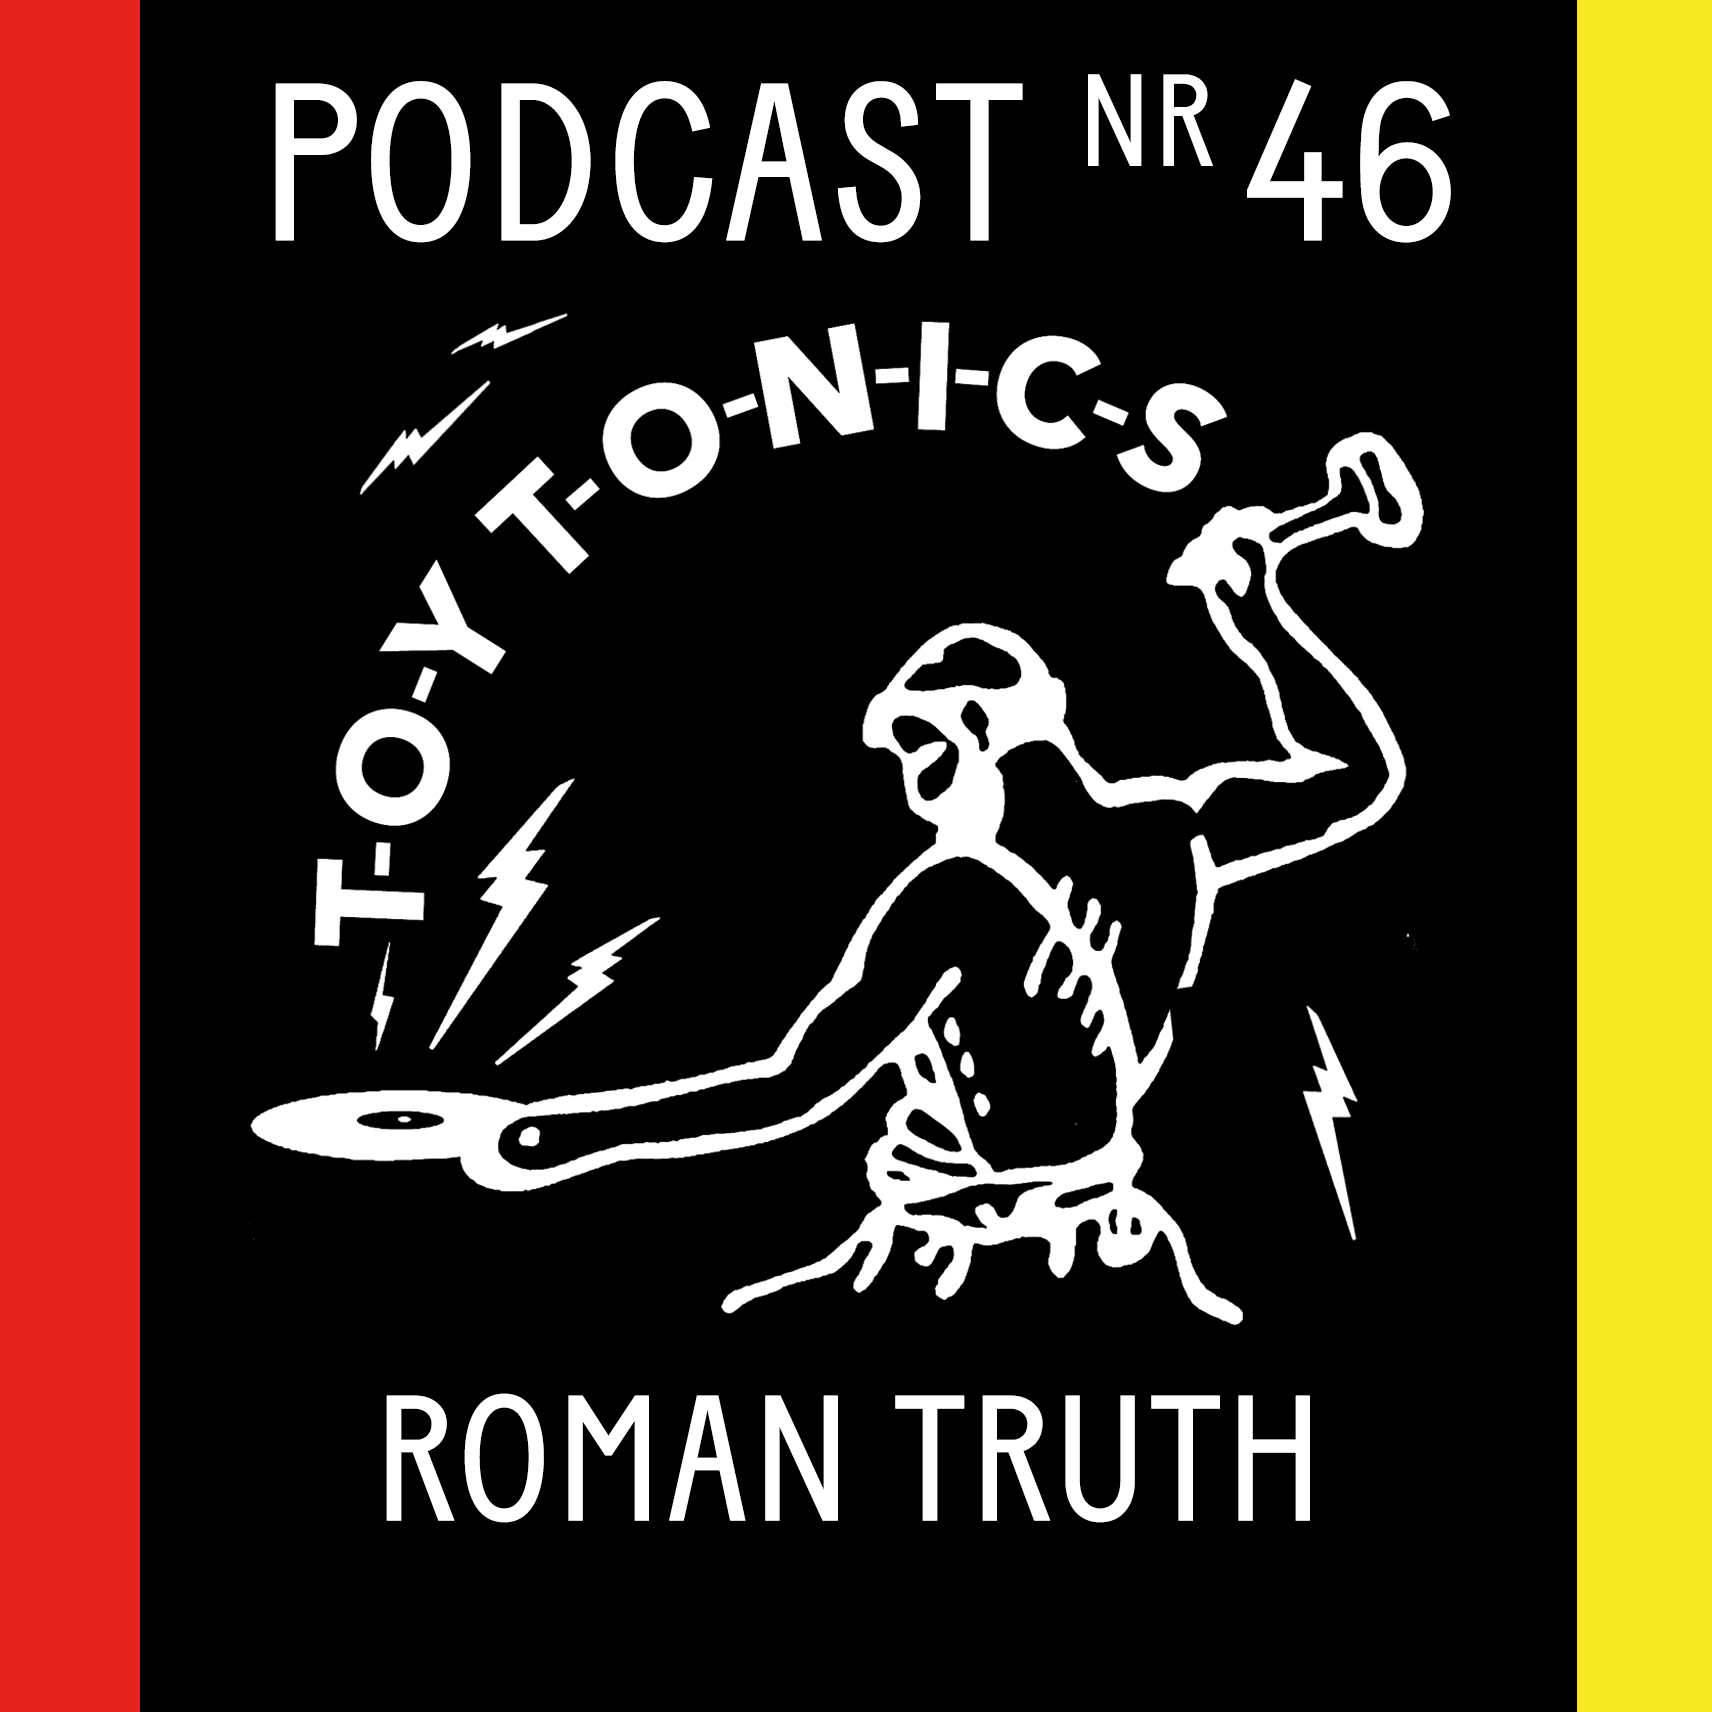 PODCAST NR 46 - Roman Truth